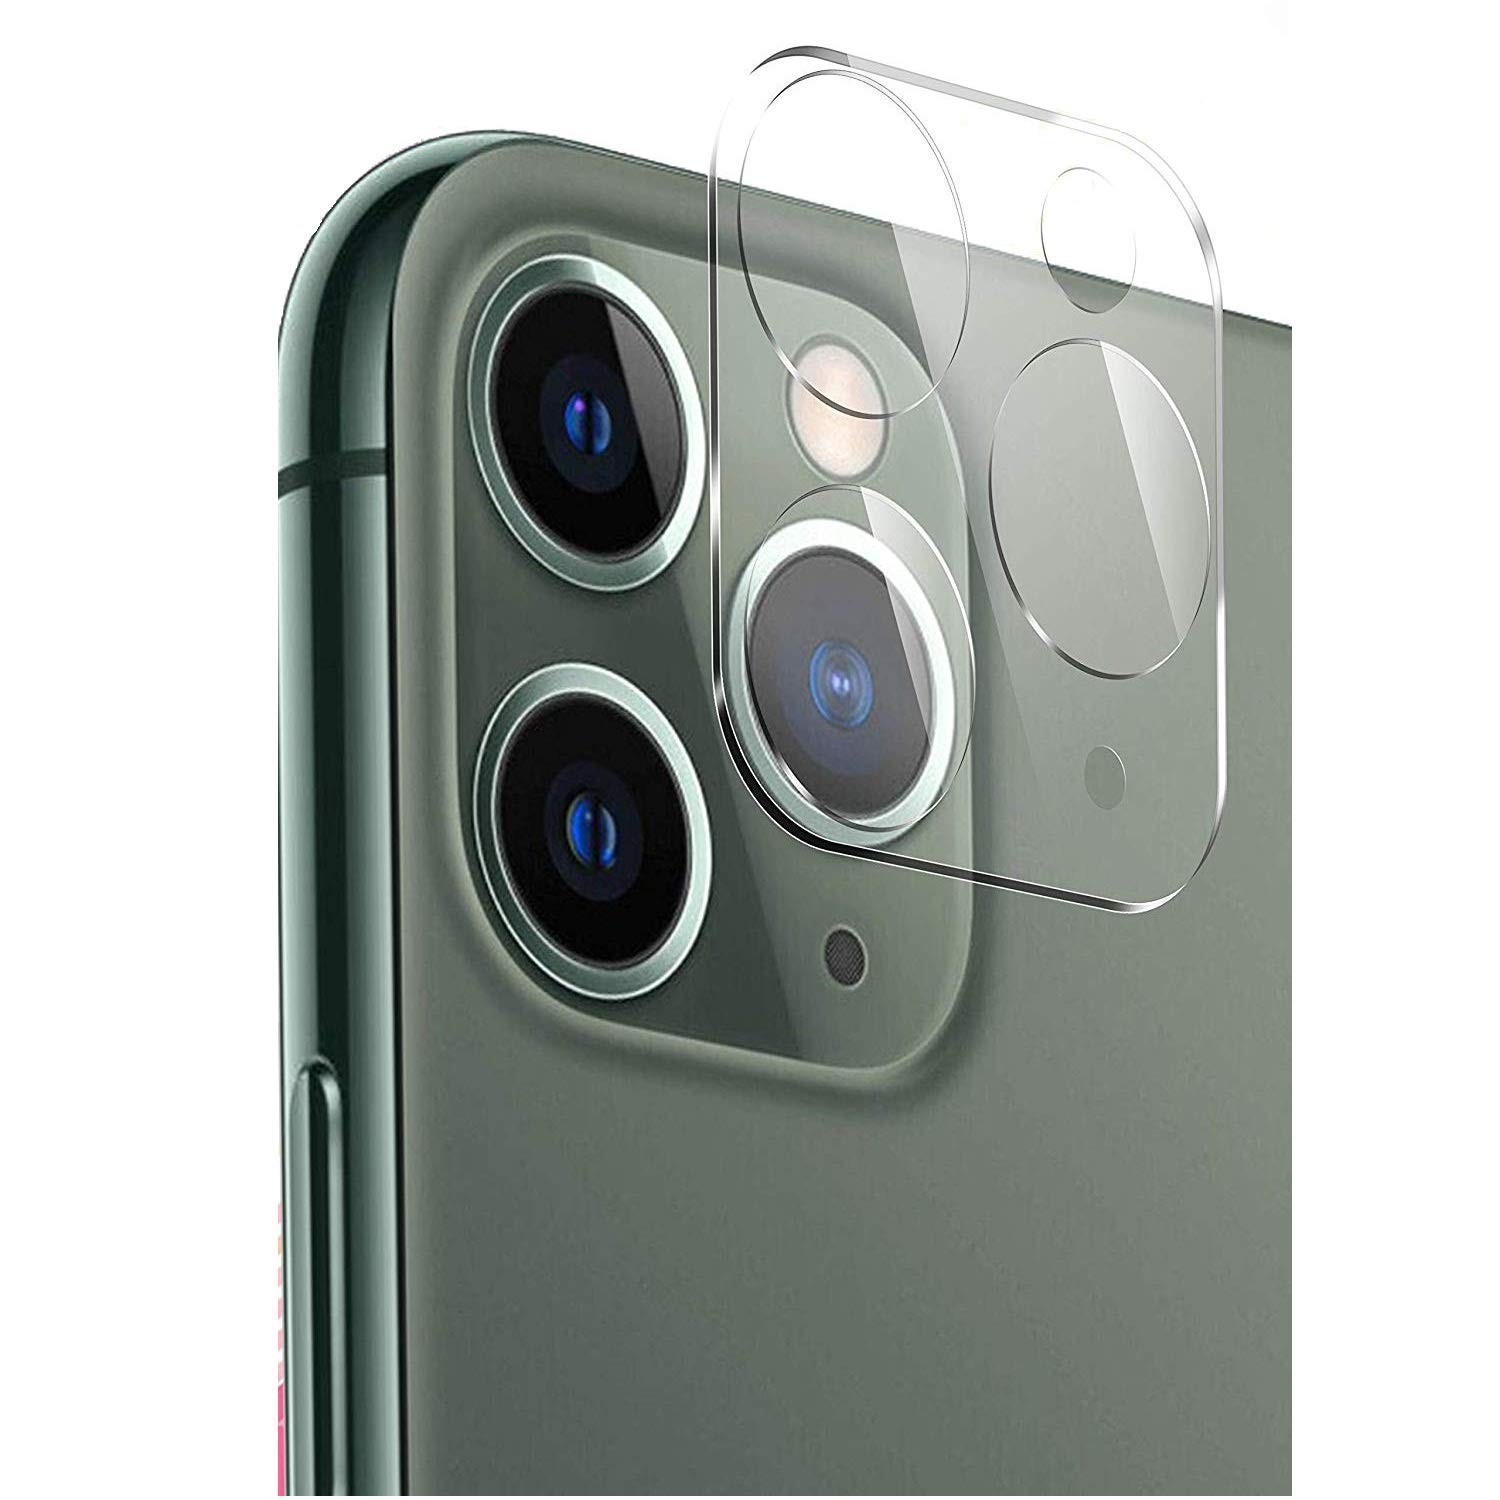 دوربین قدرتمند گوشی Iphone 11 pro Max